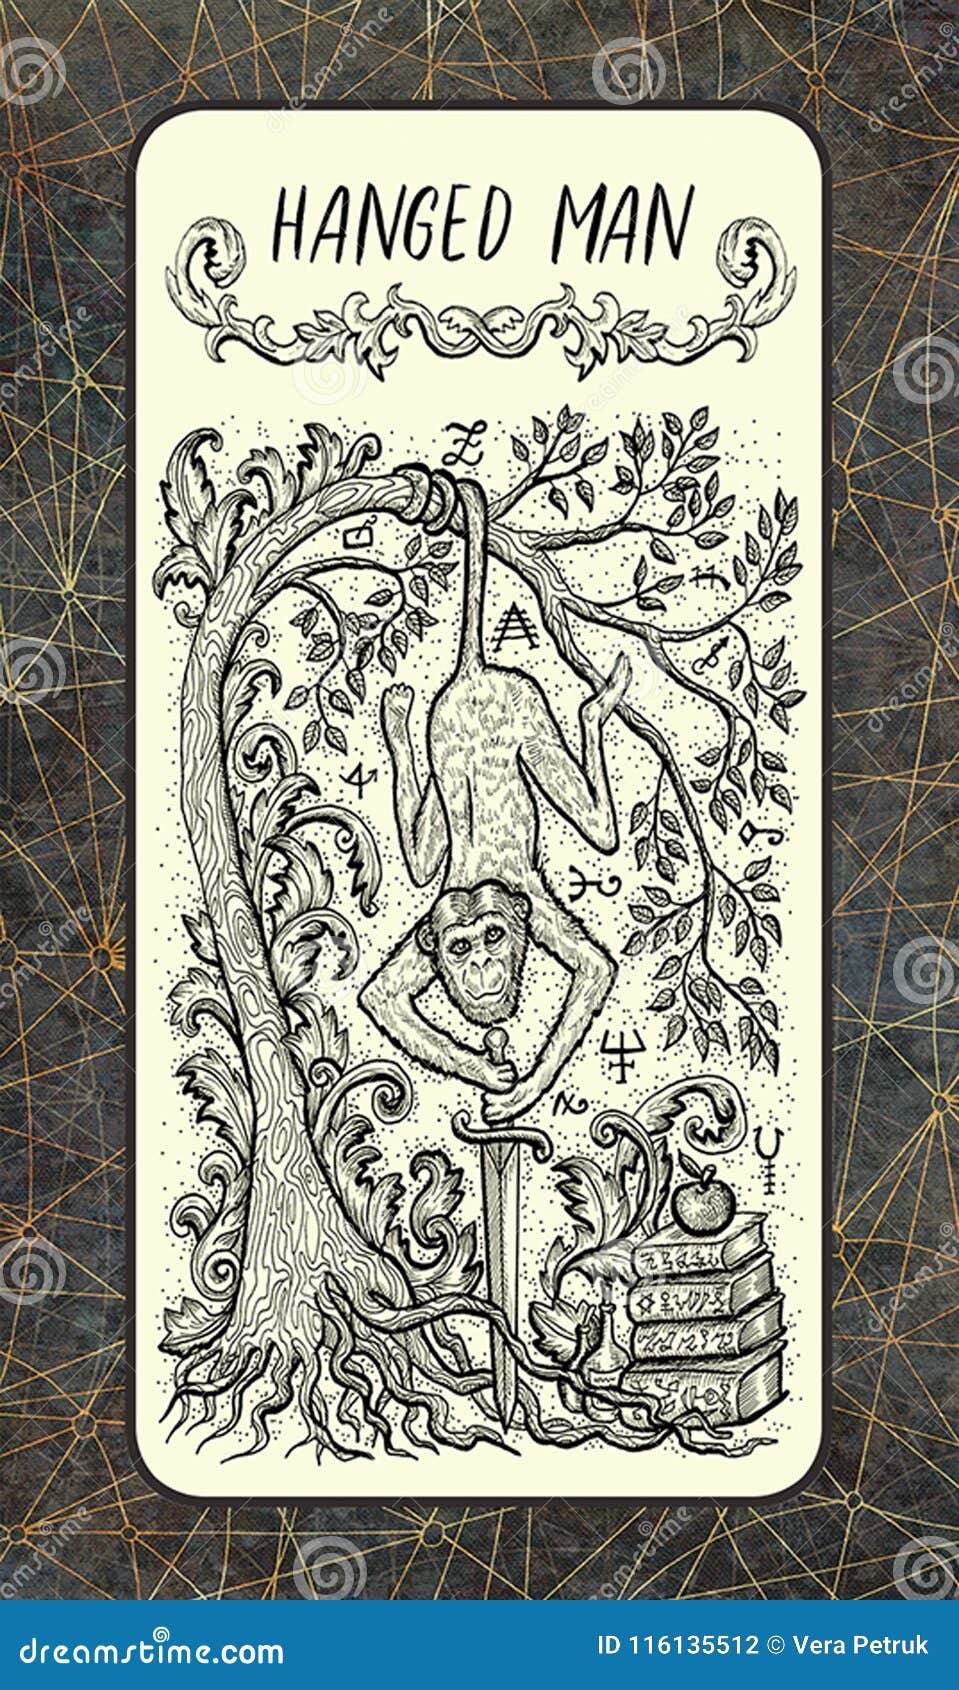 HANGED MAN TAROT Card Pen and Ink Drawing Digital Art Print by